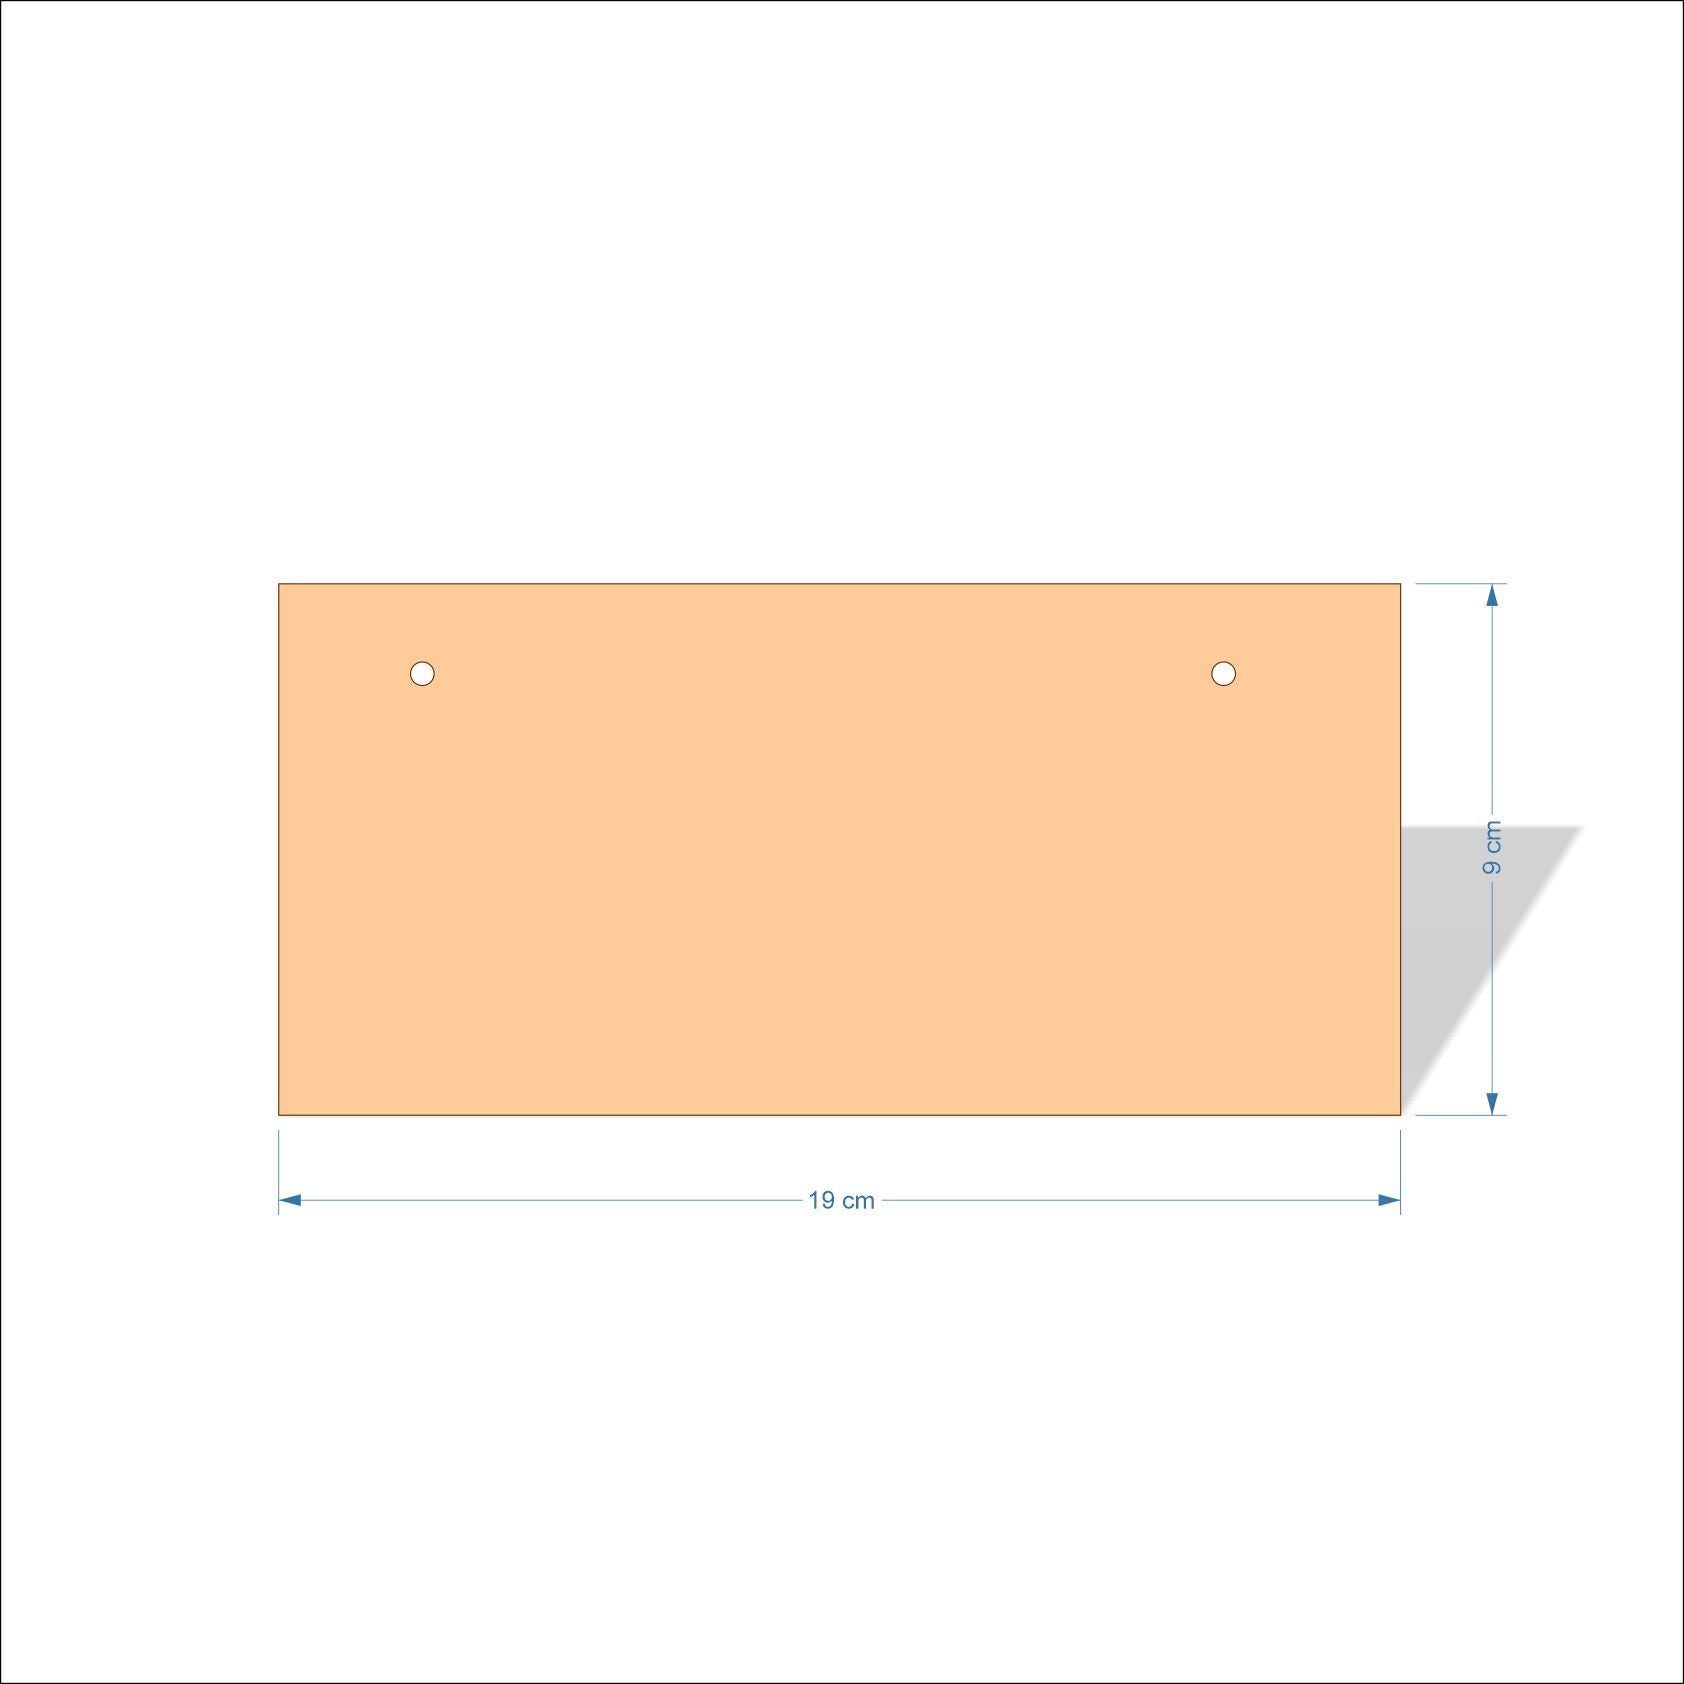 19 cm X 9 cm 3mm MDF Plaques with square corners